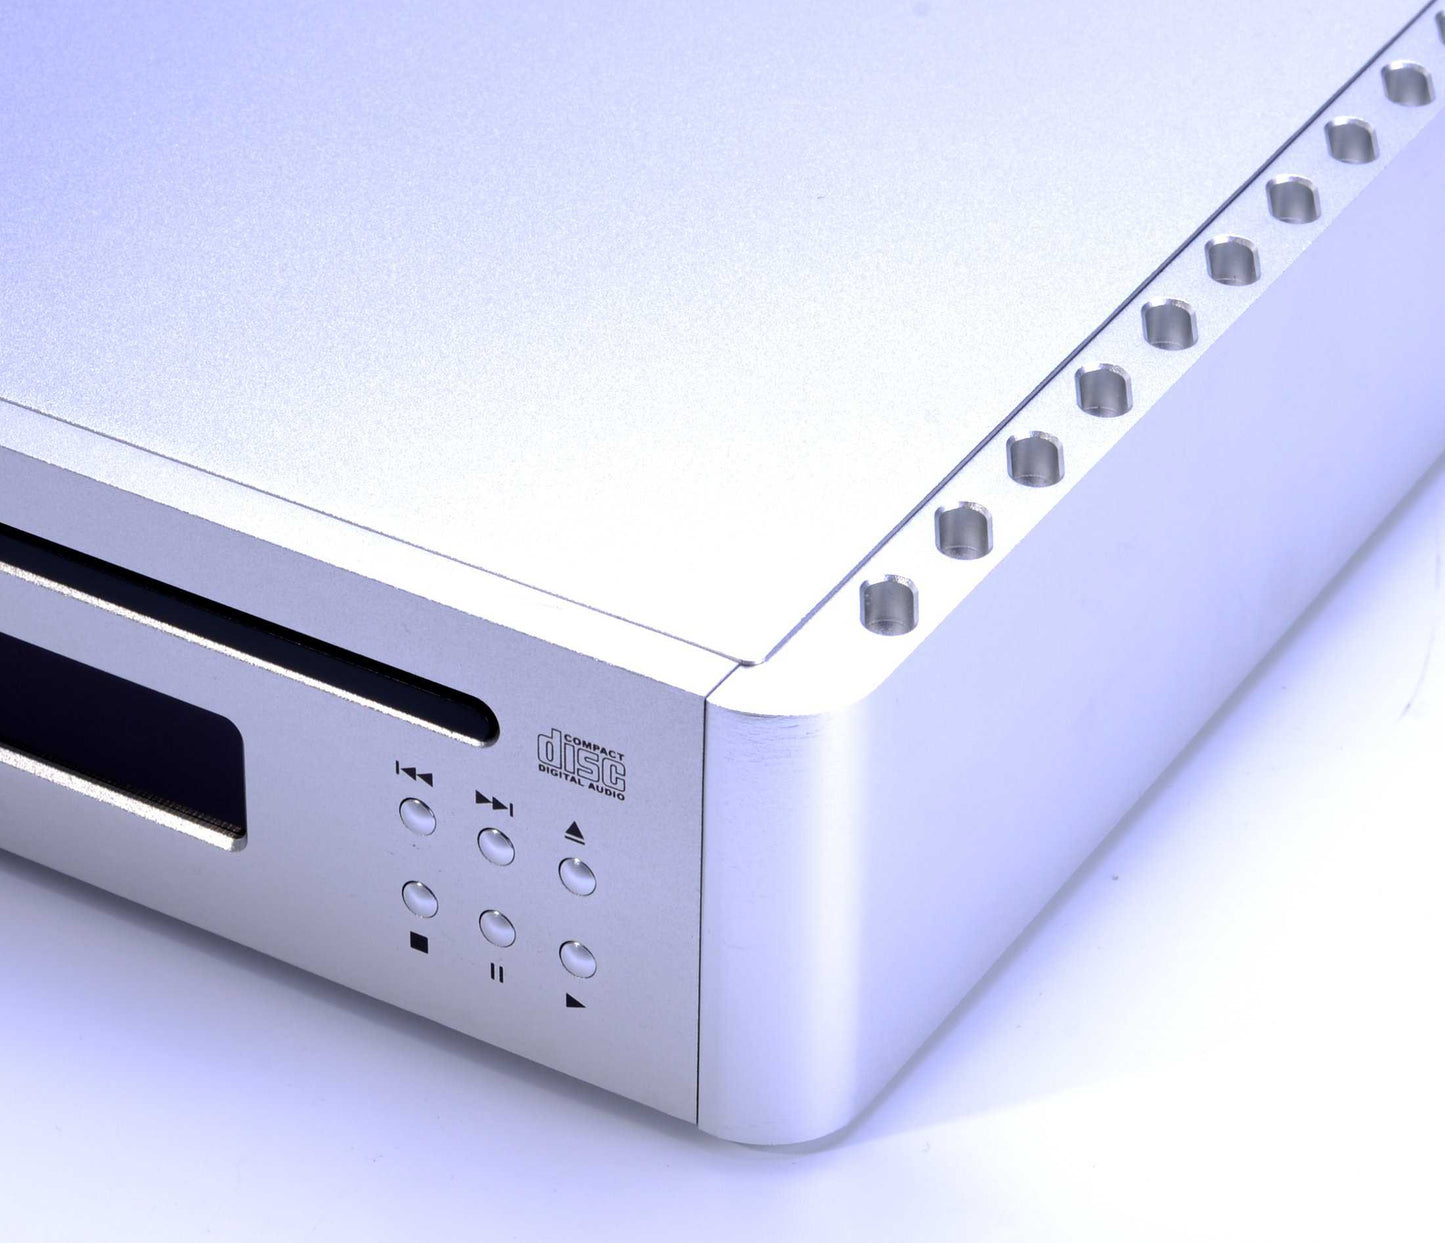 Bada PH-15 Mini CD Player - DestinYAudio